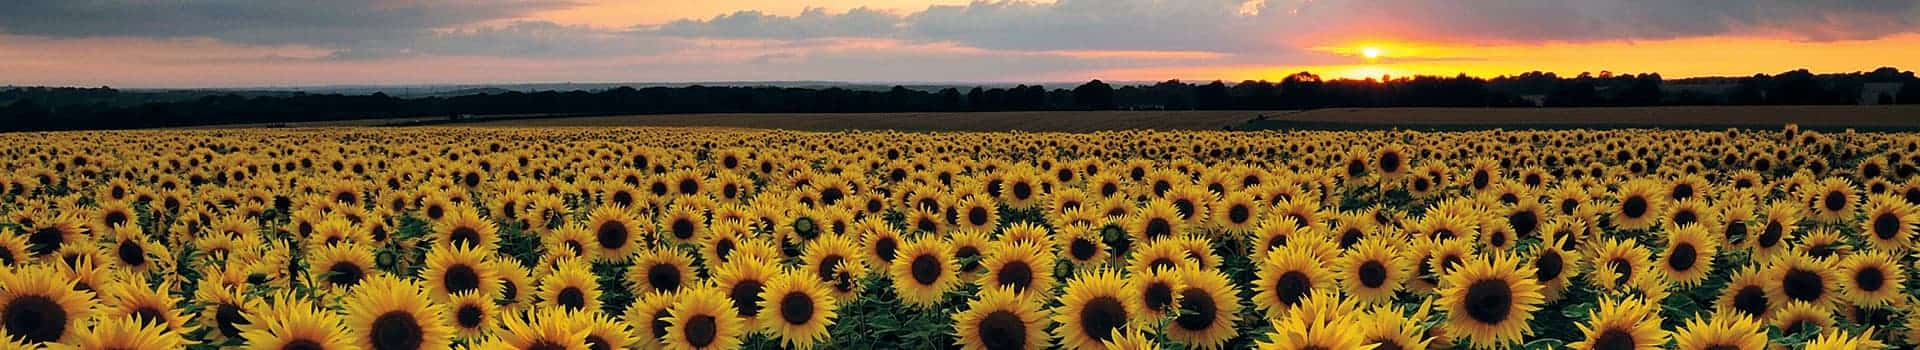 Kickstart Kindness: Field of sunflowers